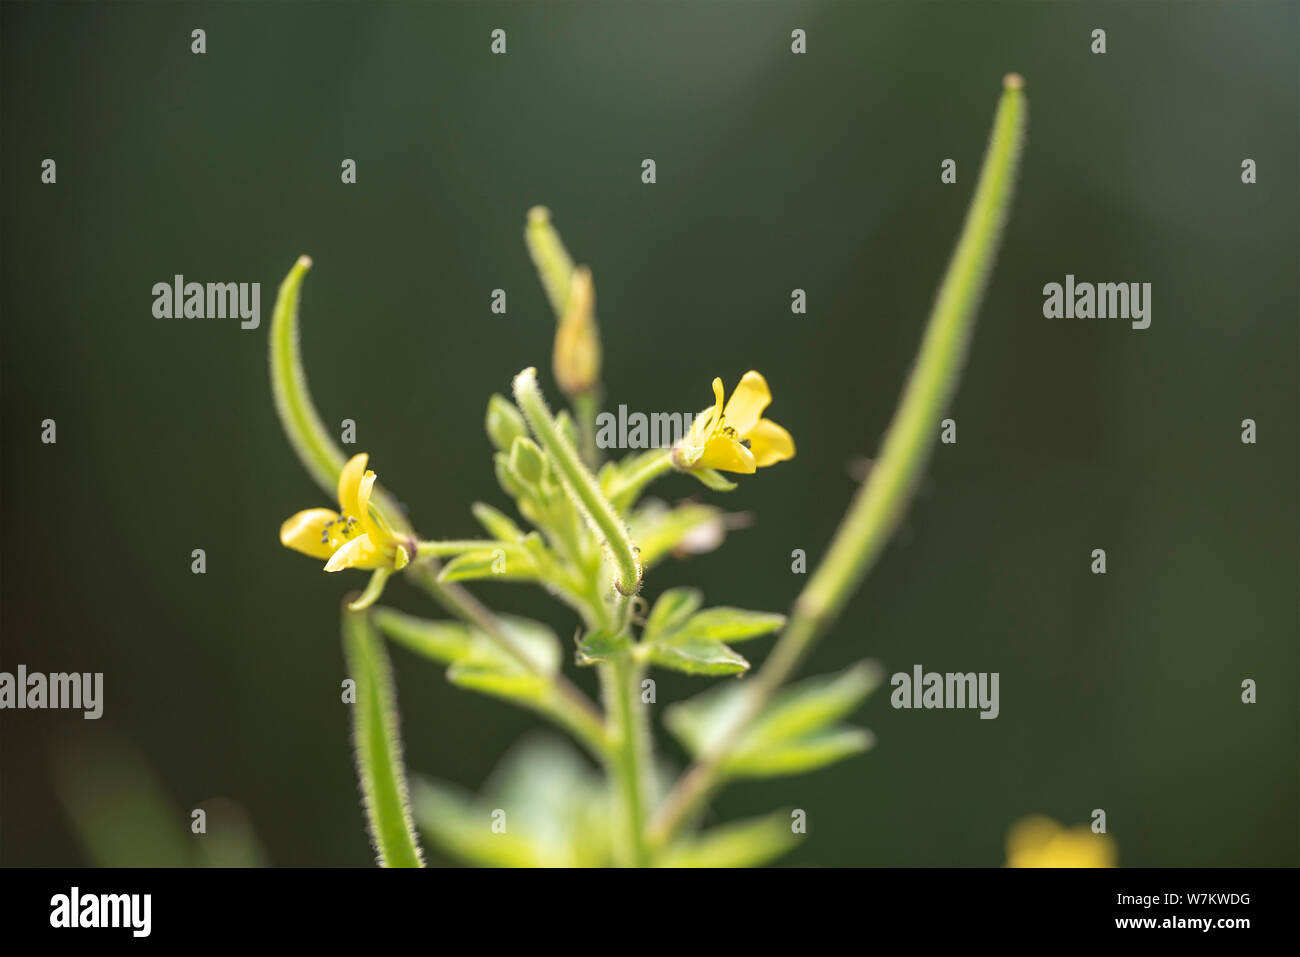 Plant Gynandropsis gynandra close-up in natural light. Thailand. Stock Photo